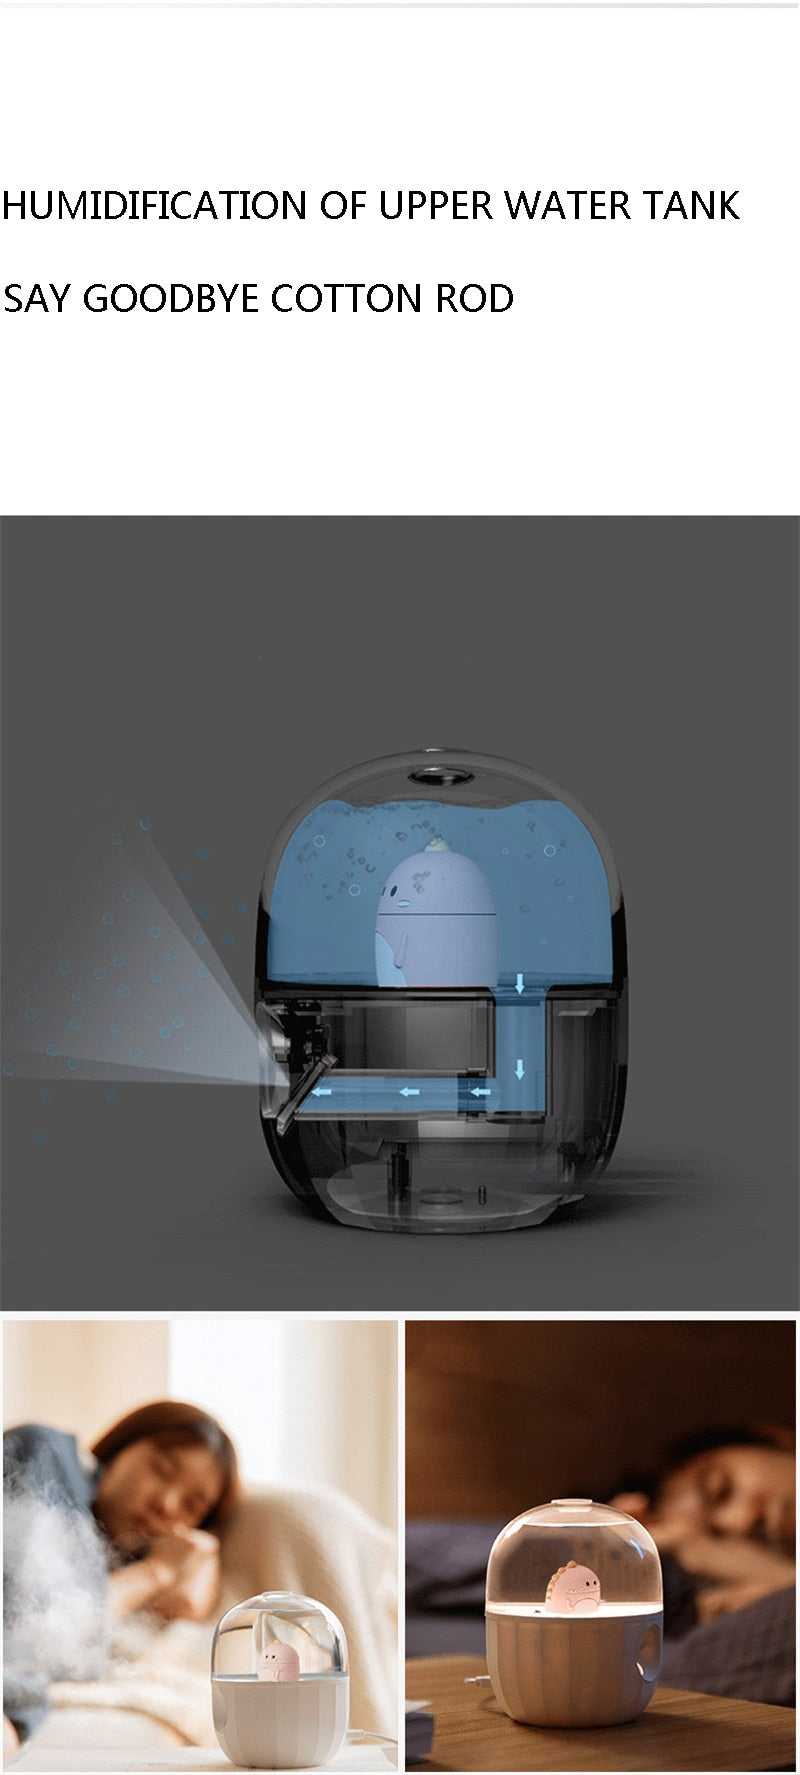 Cute Cartoon Ultrasonic Humidifier - The Best Commerce